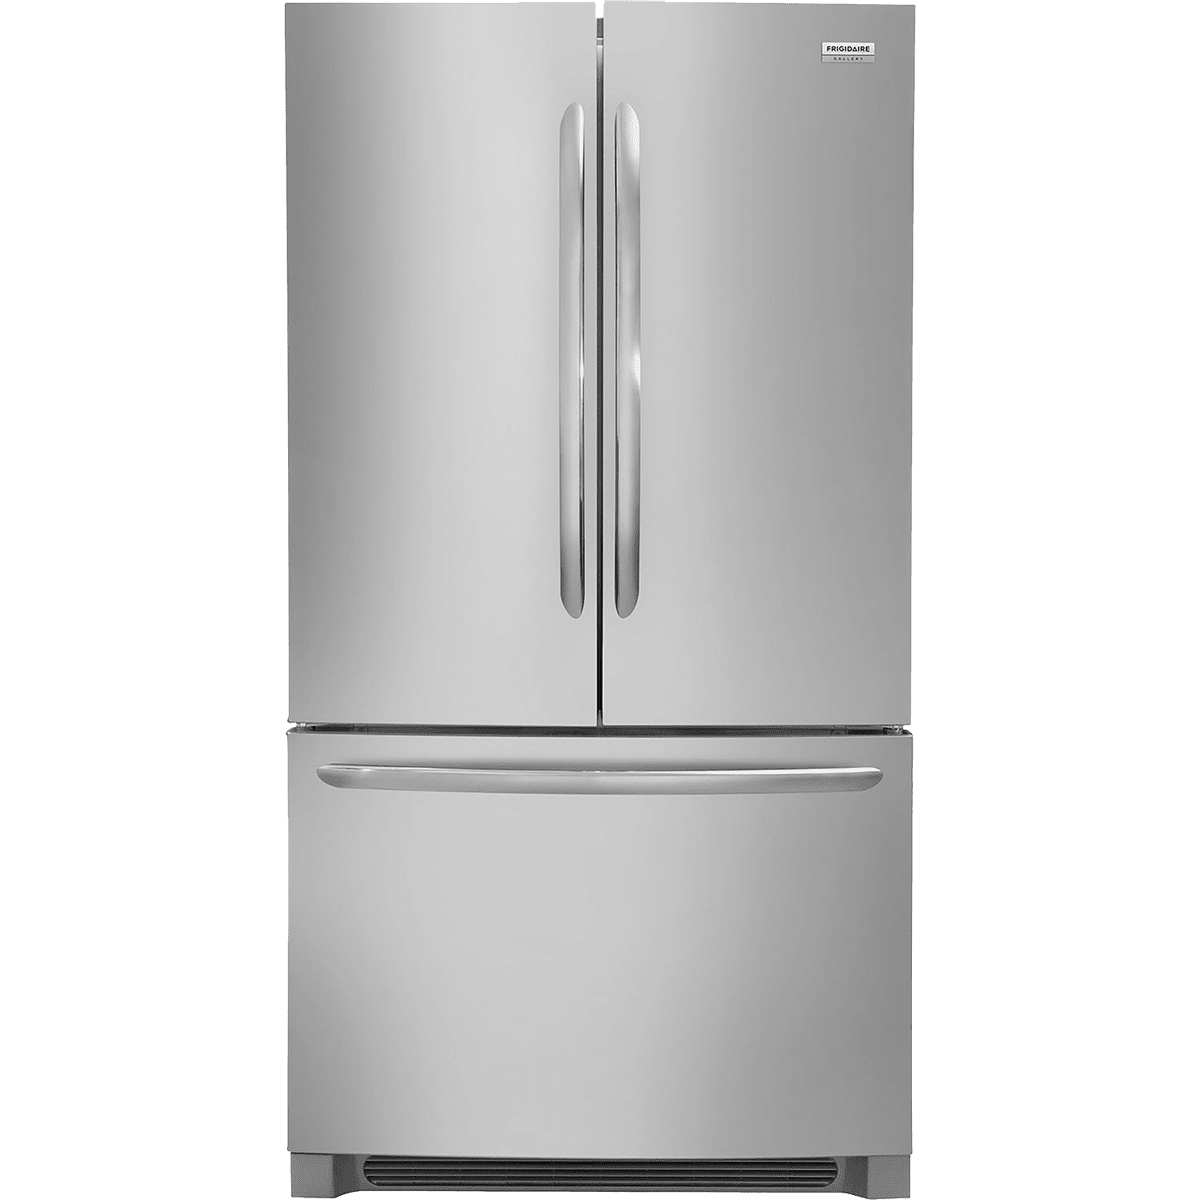 Magic Chef MCBR350S2 3.5 cu. ft. Mini Refrigerator, Stainless Look 